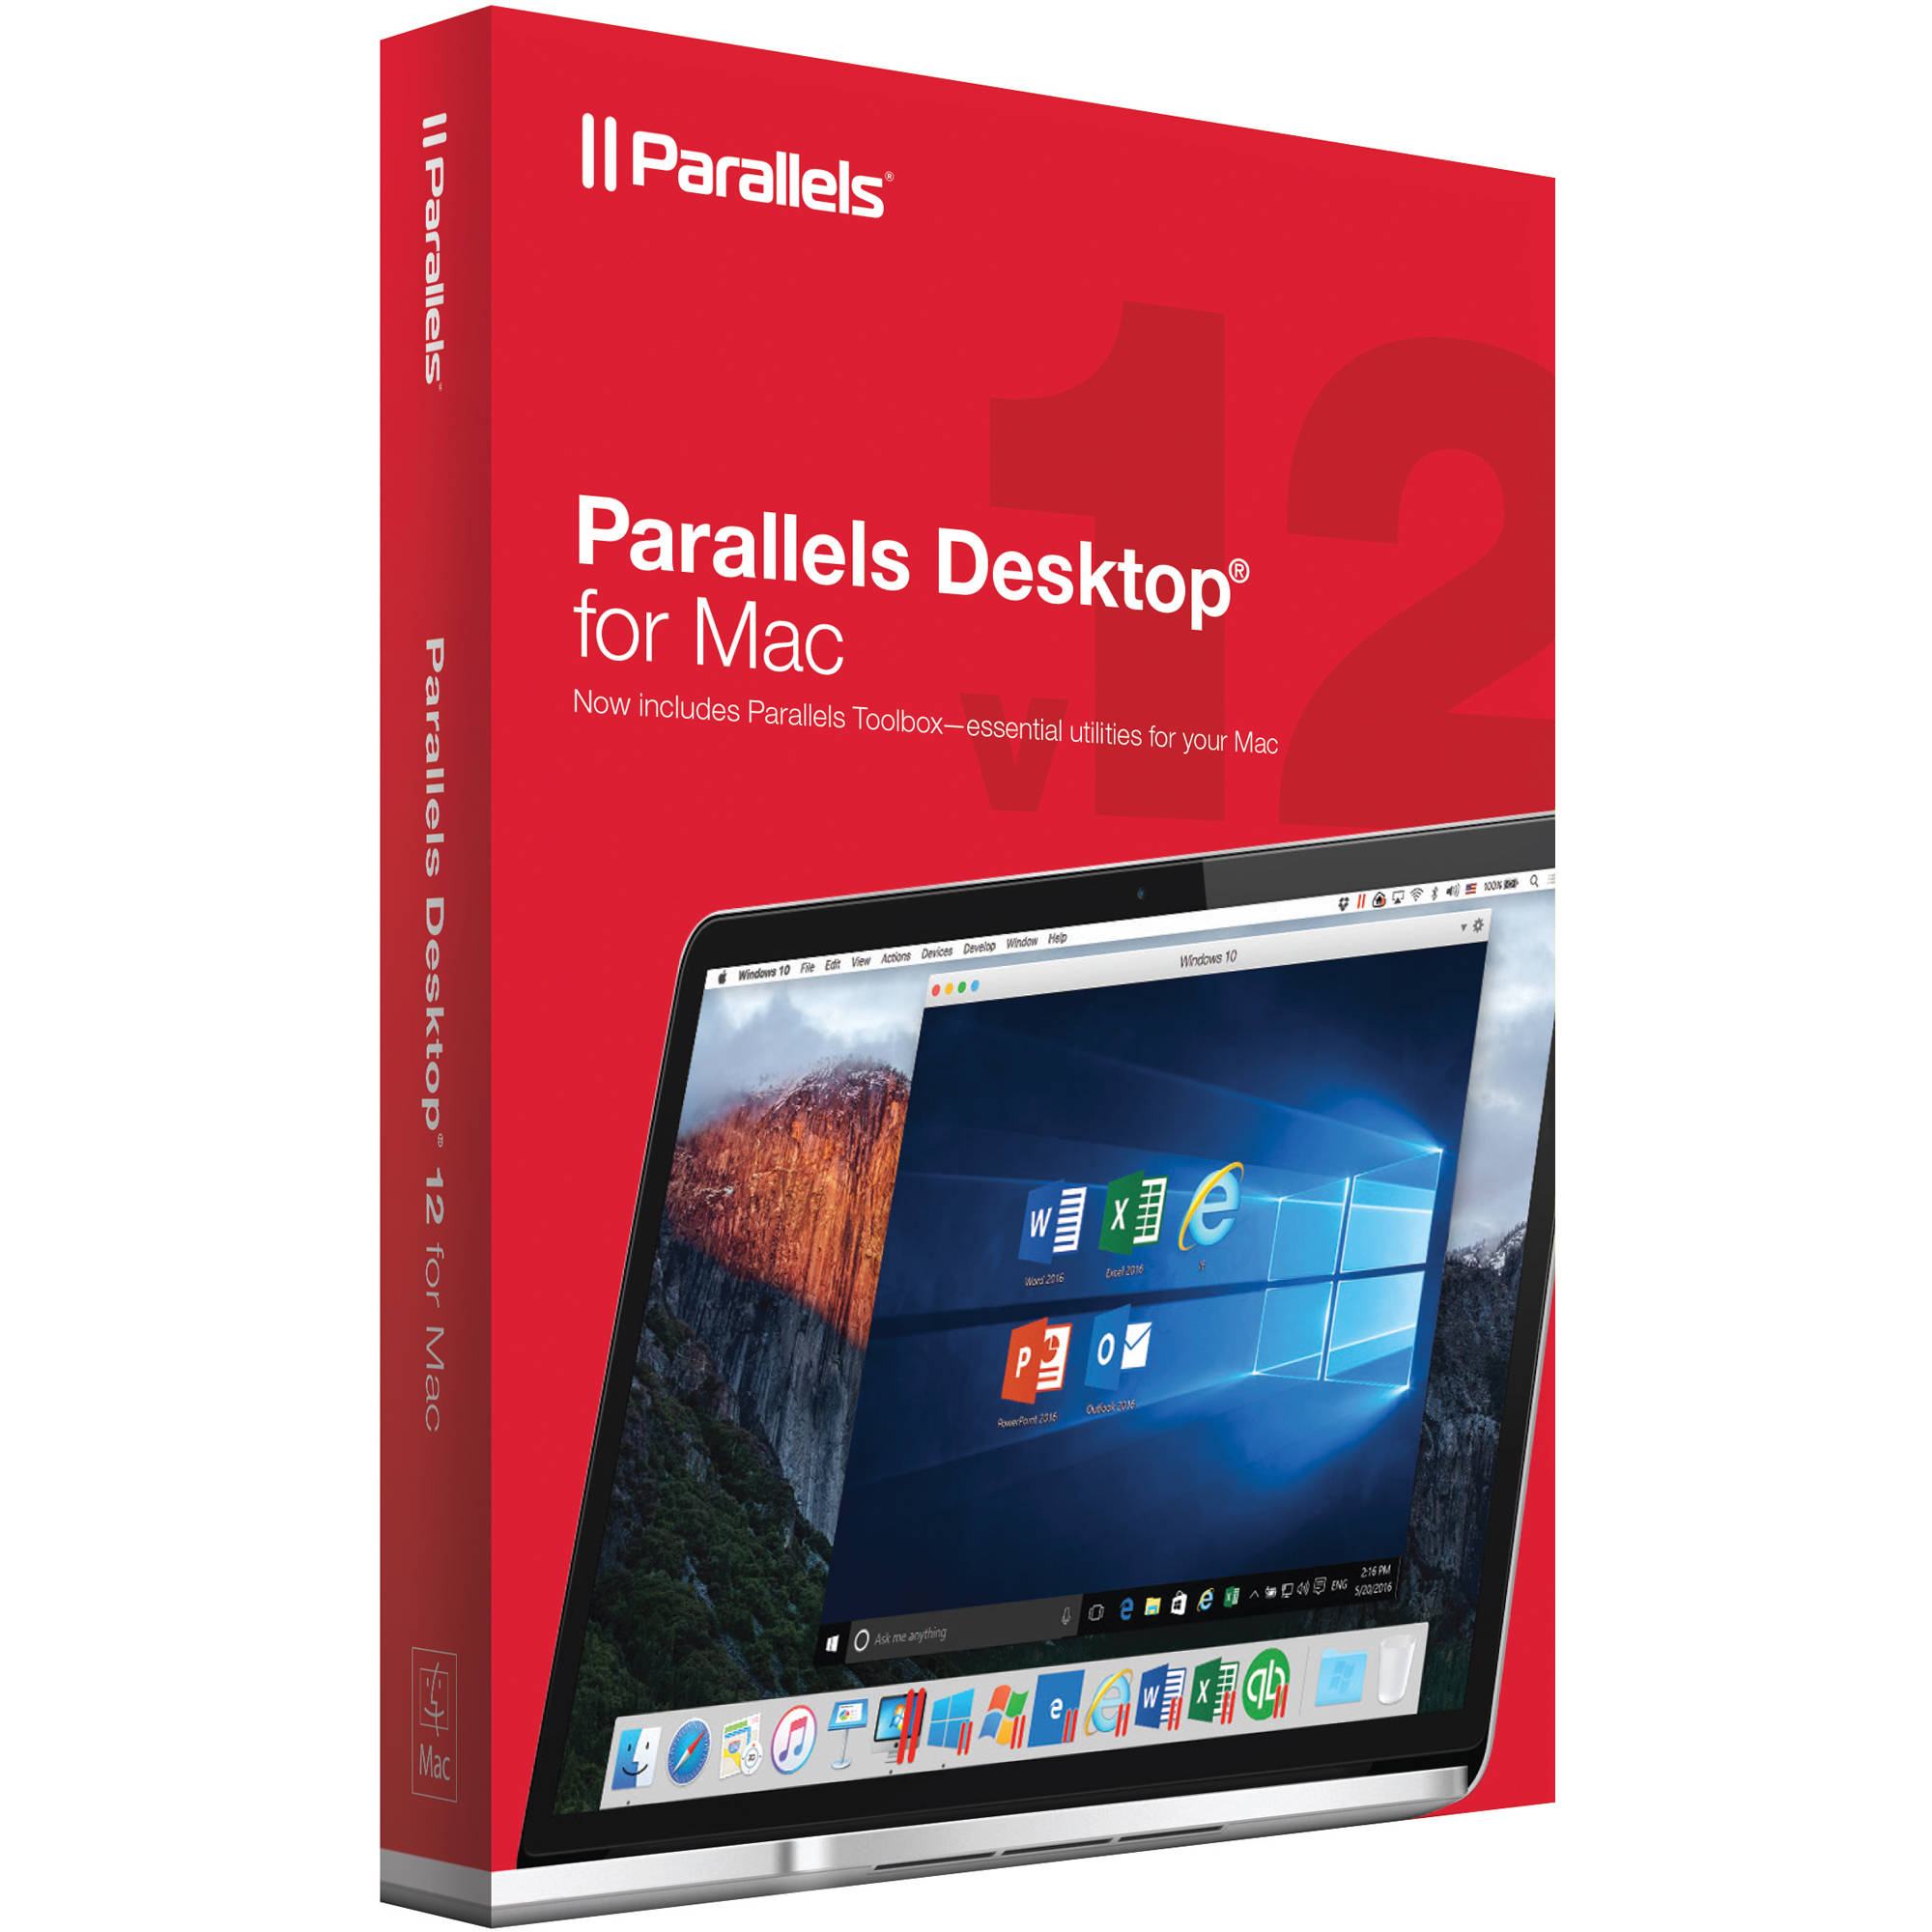 parallels desktop free